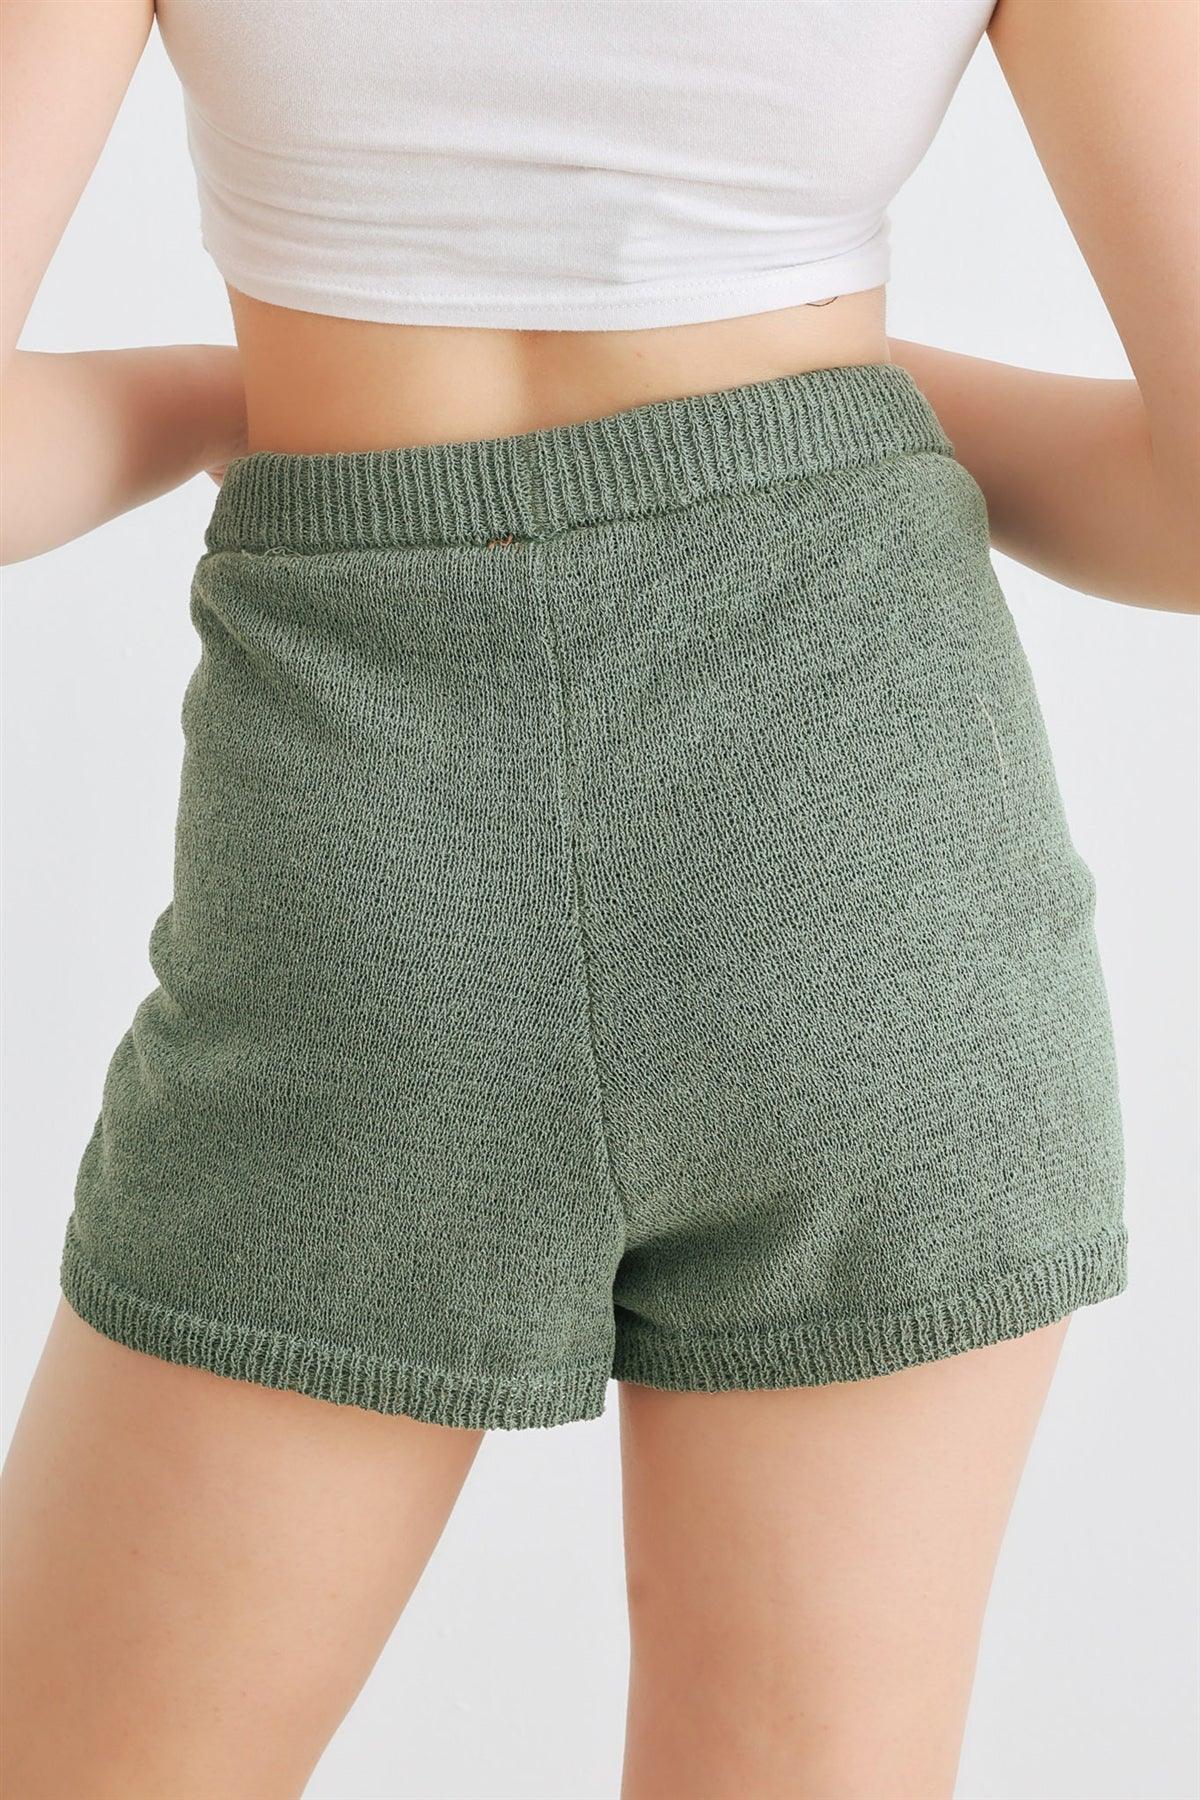 Dusty Green Knit High Waist Shorts /1-2-2-1